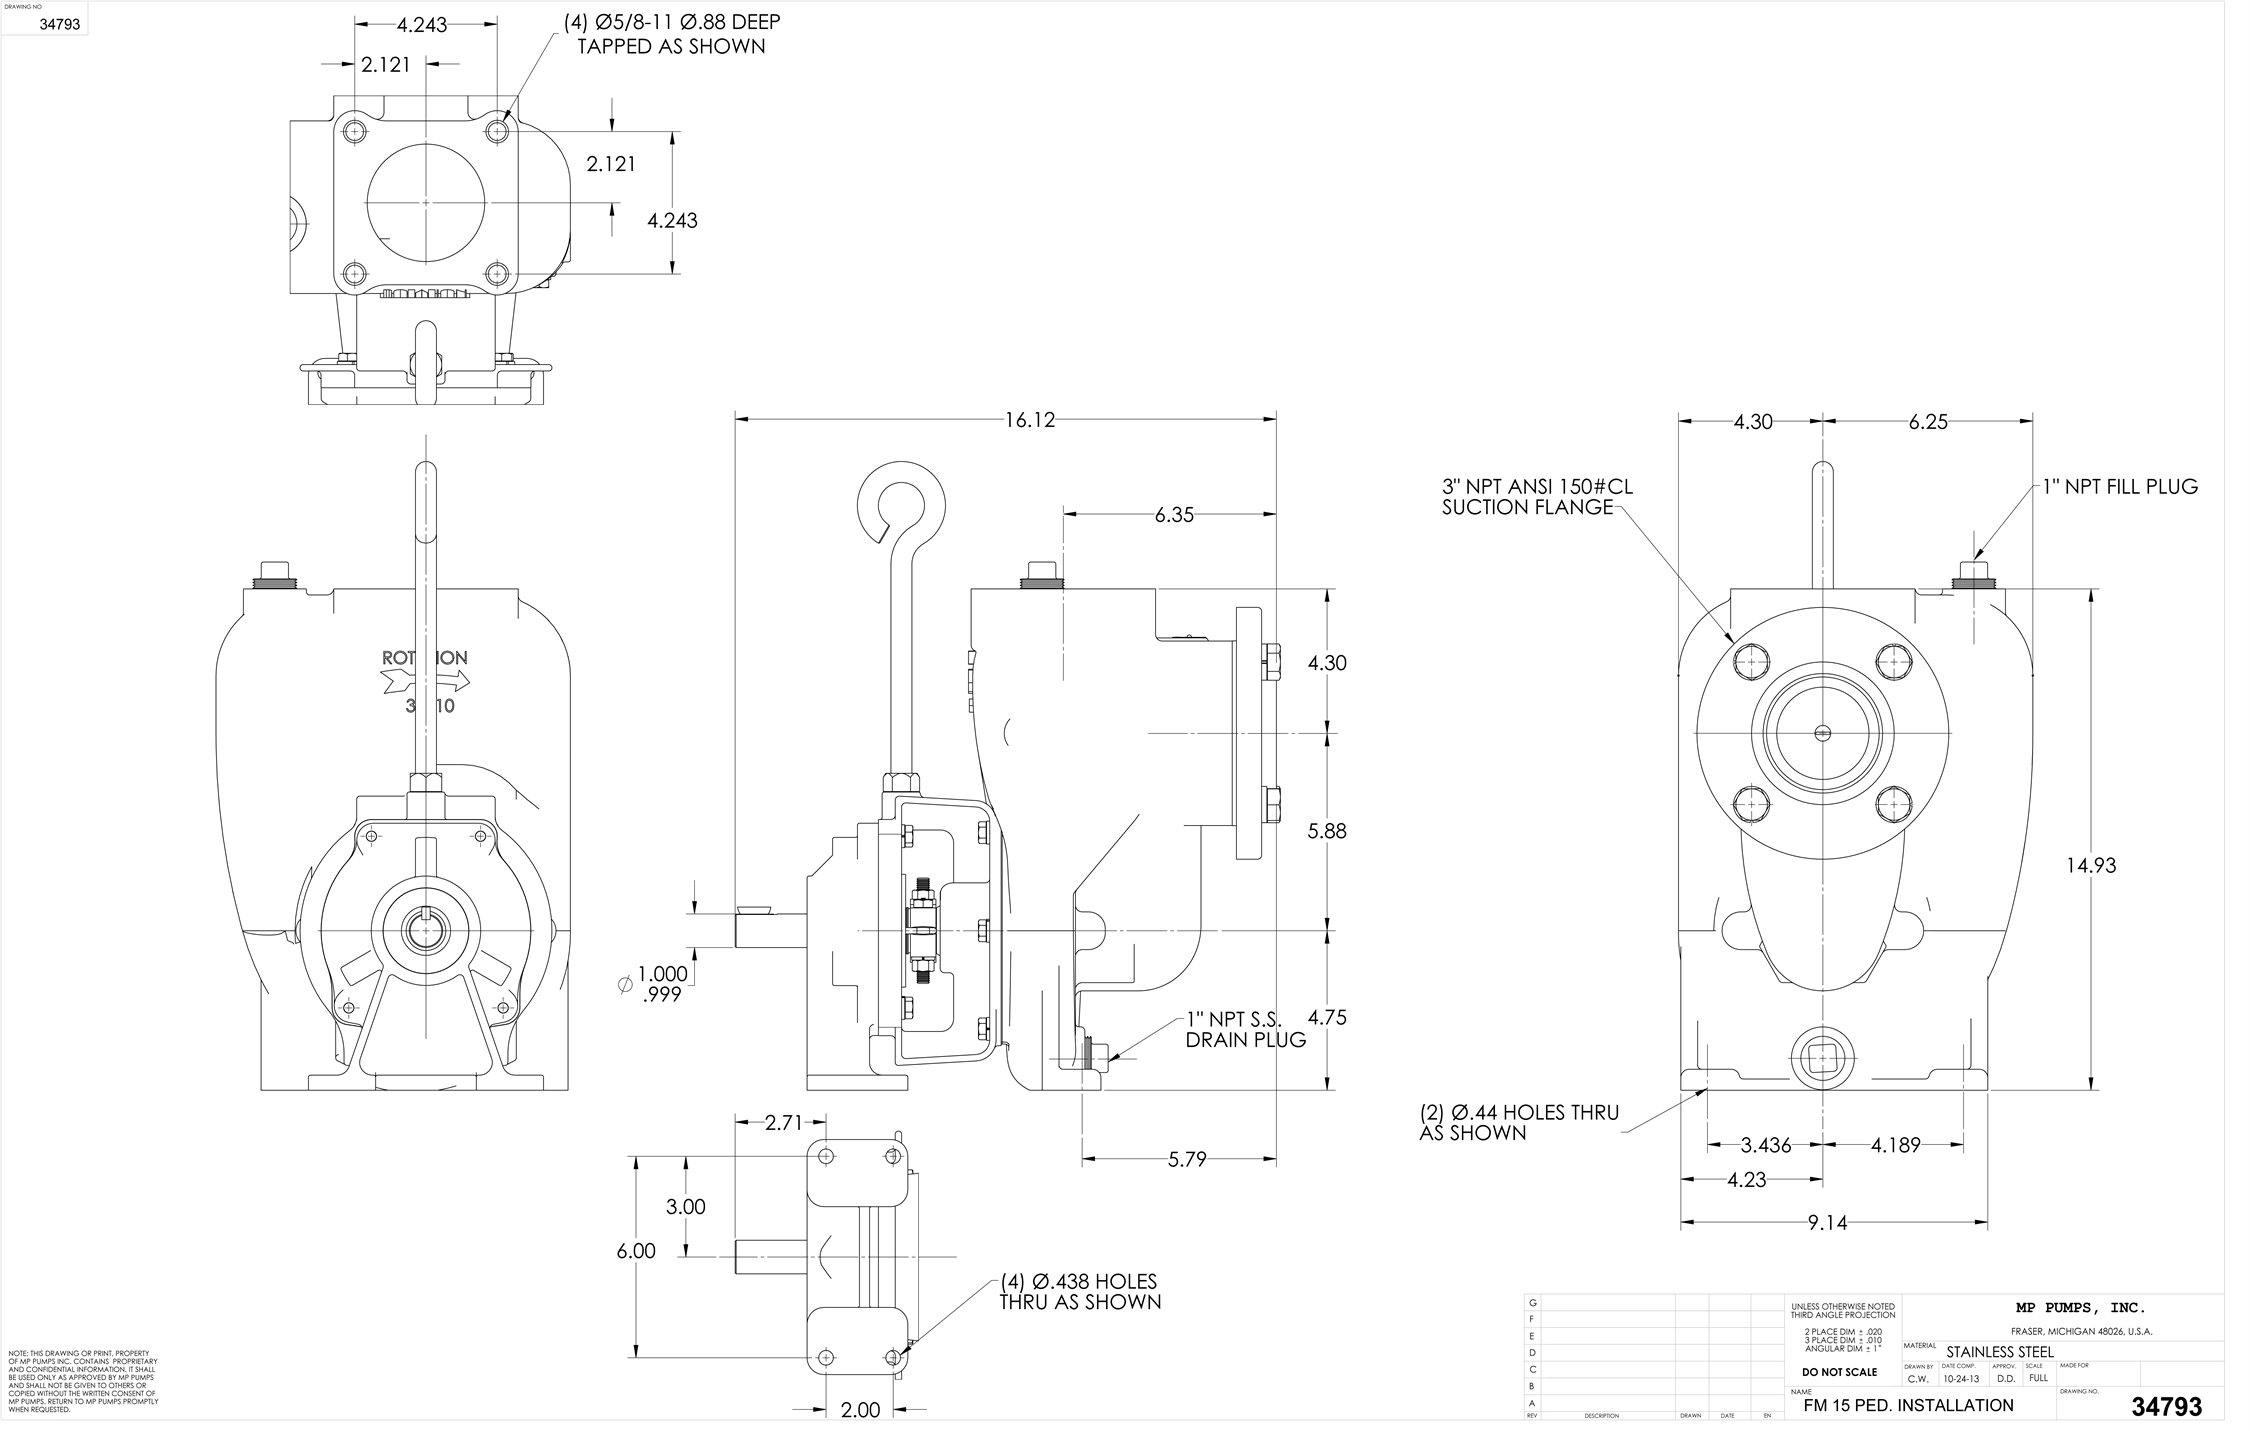 flomax-15-316-ss-hydraulic-industrial-vacuum-pump_drawing-34793